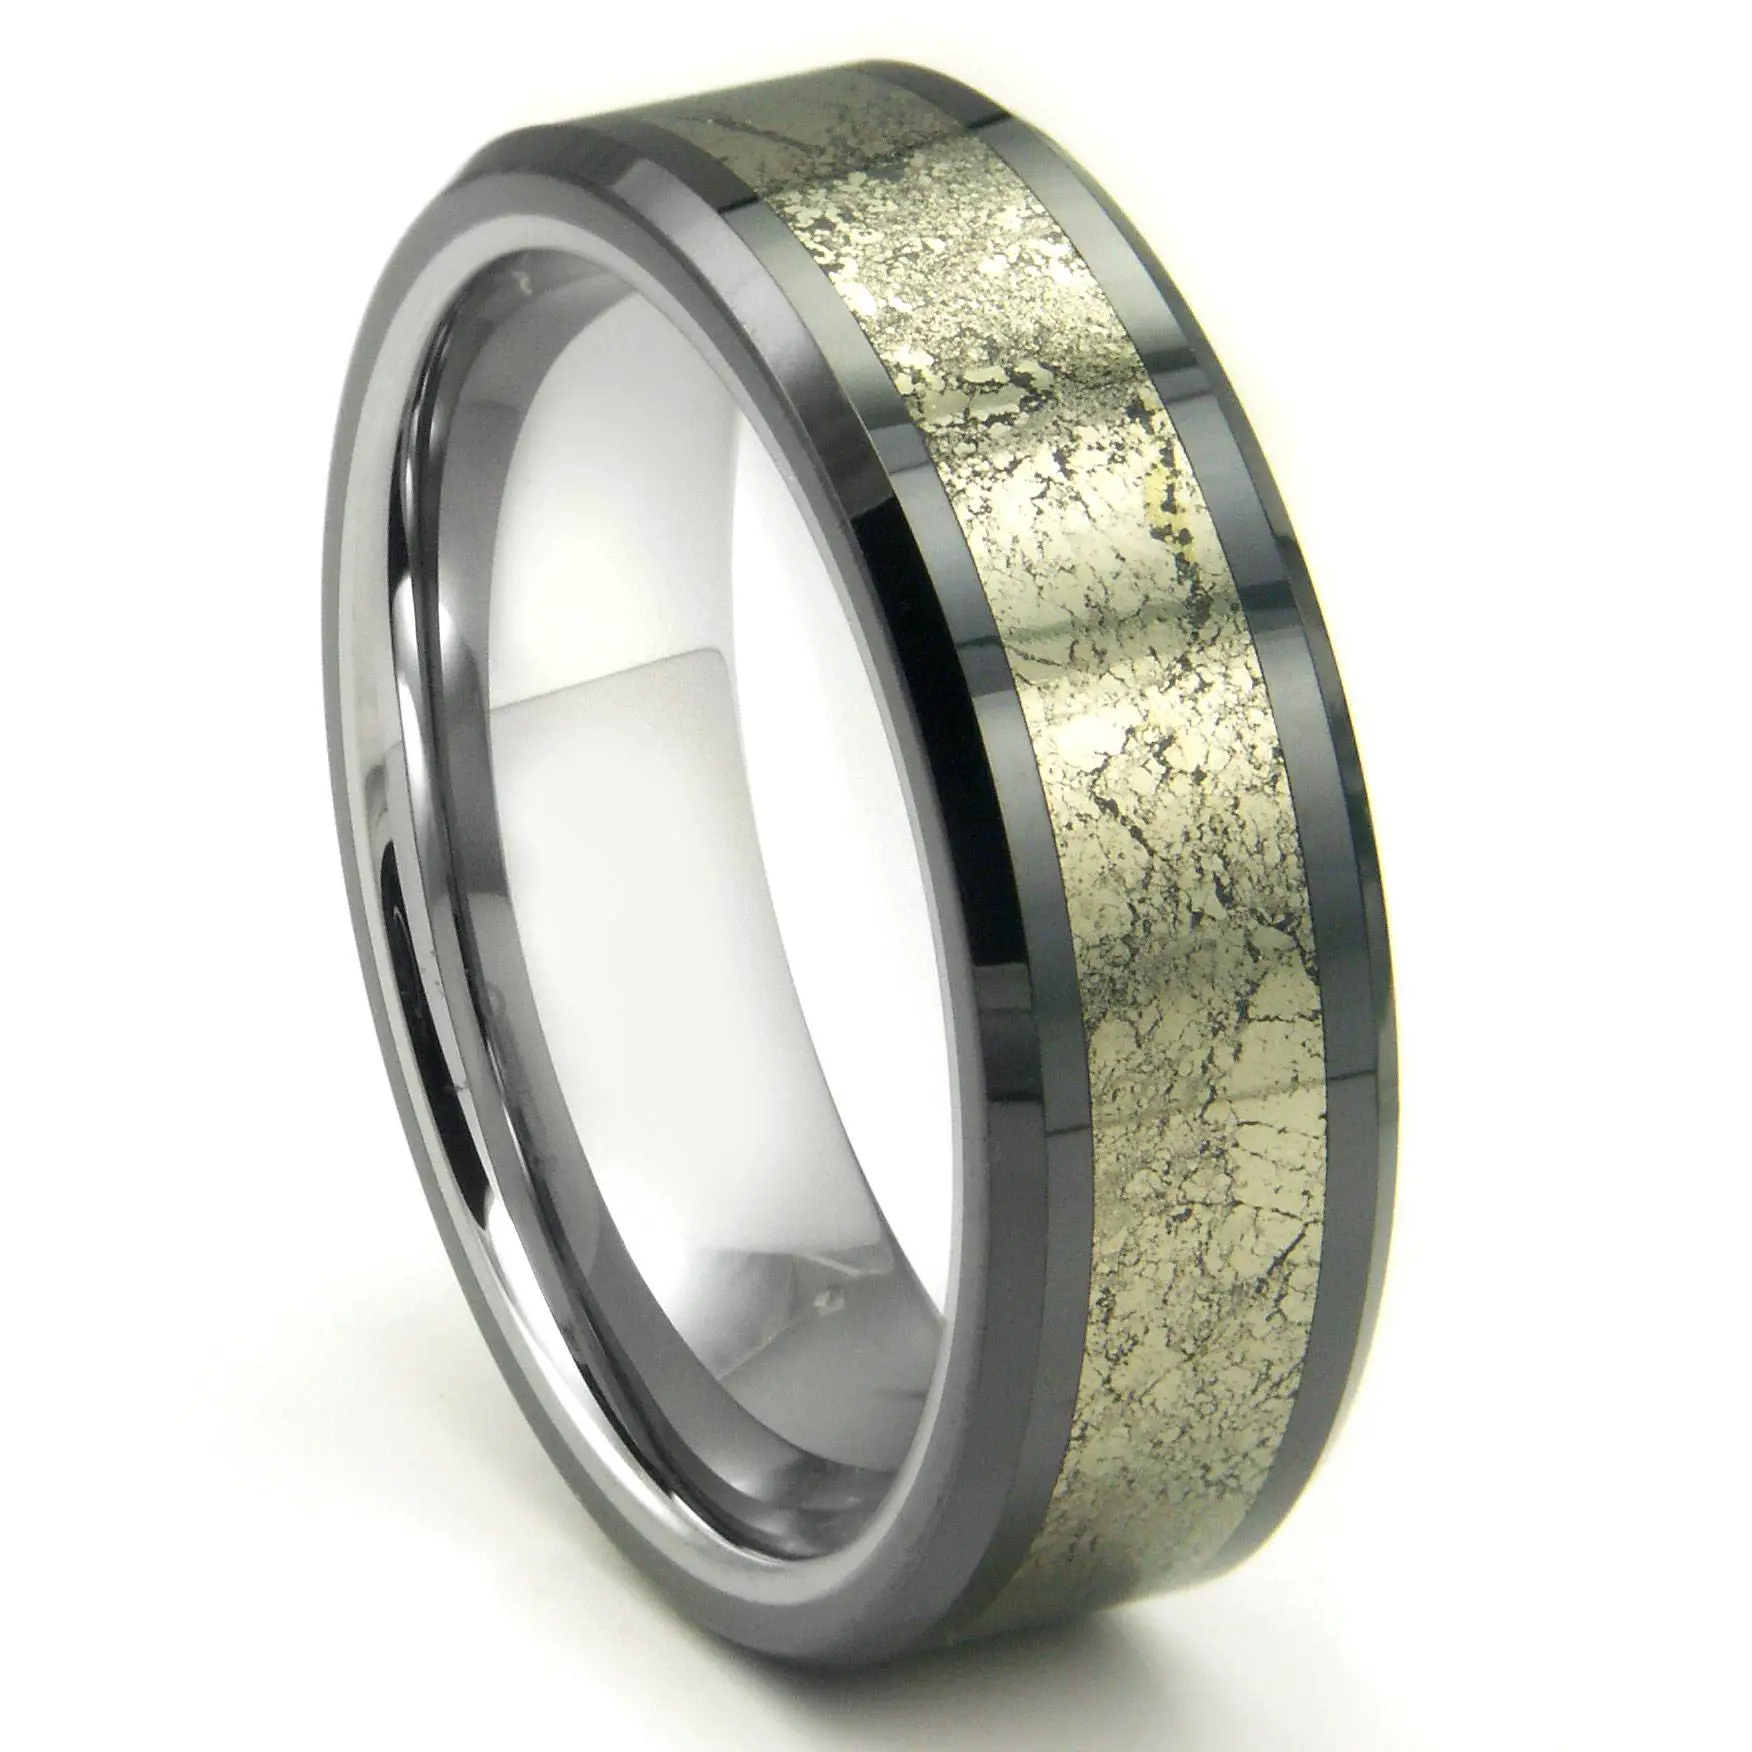 2021 Popular Tungsten Carbide Wedding Bands Pros and Cons